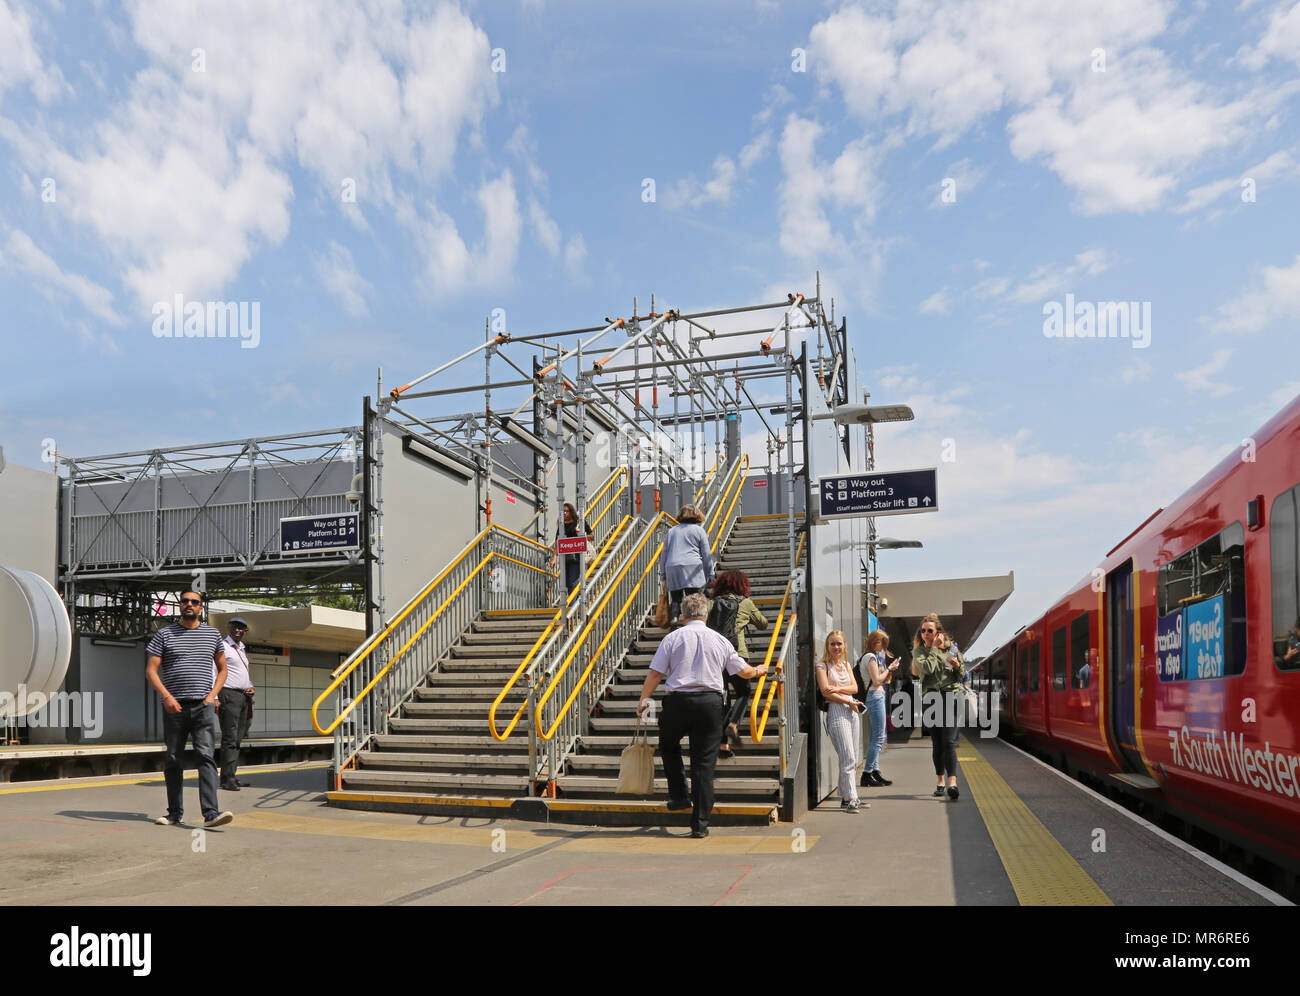 A temporary footbridge provides access between platforms at Twickenham railway station in West London, UK Stock Photo